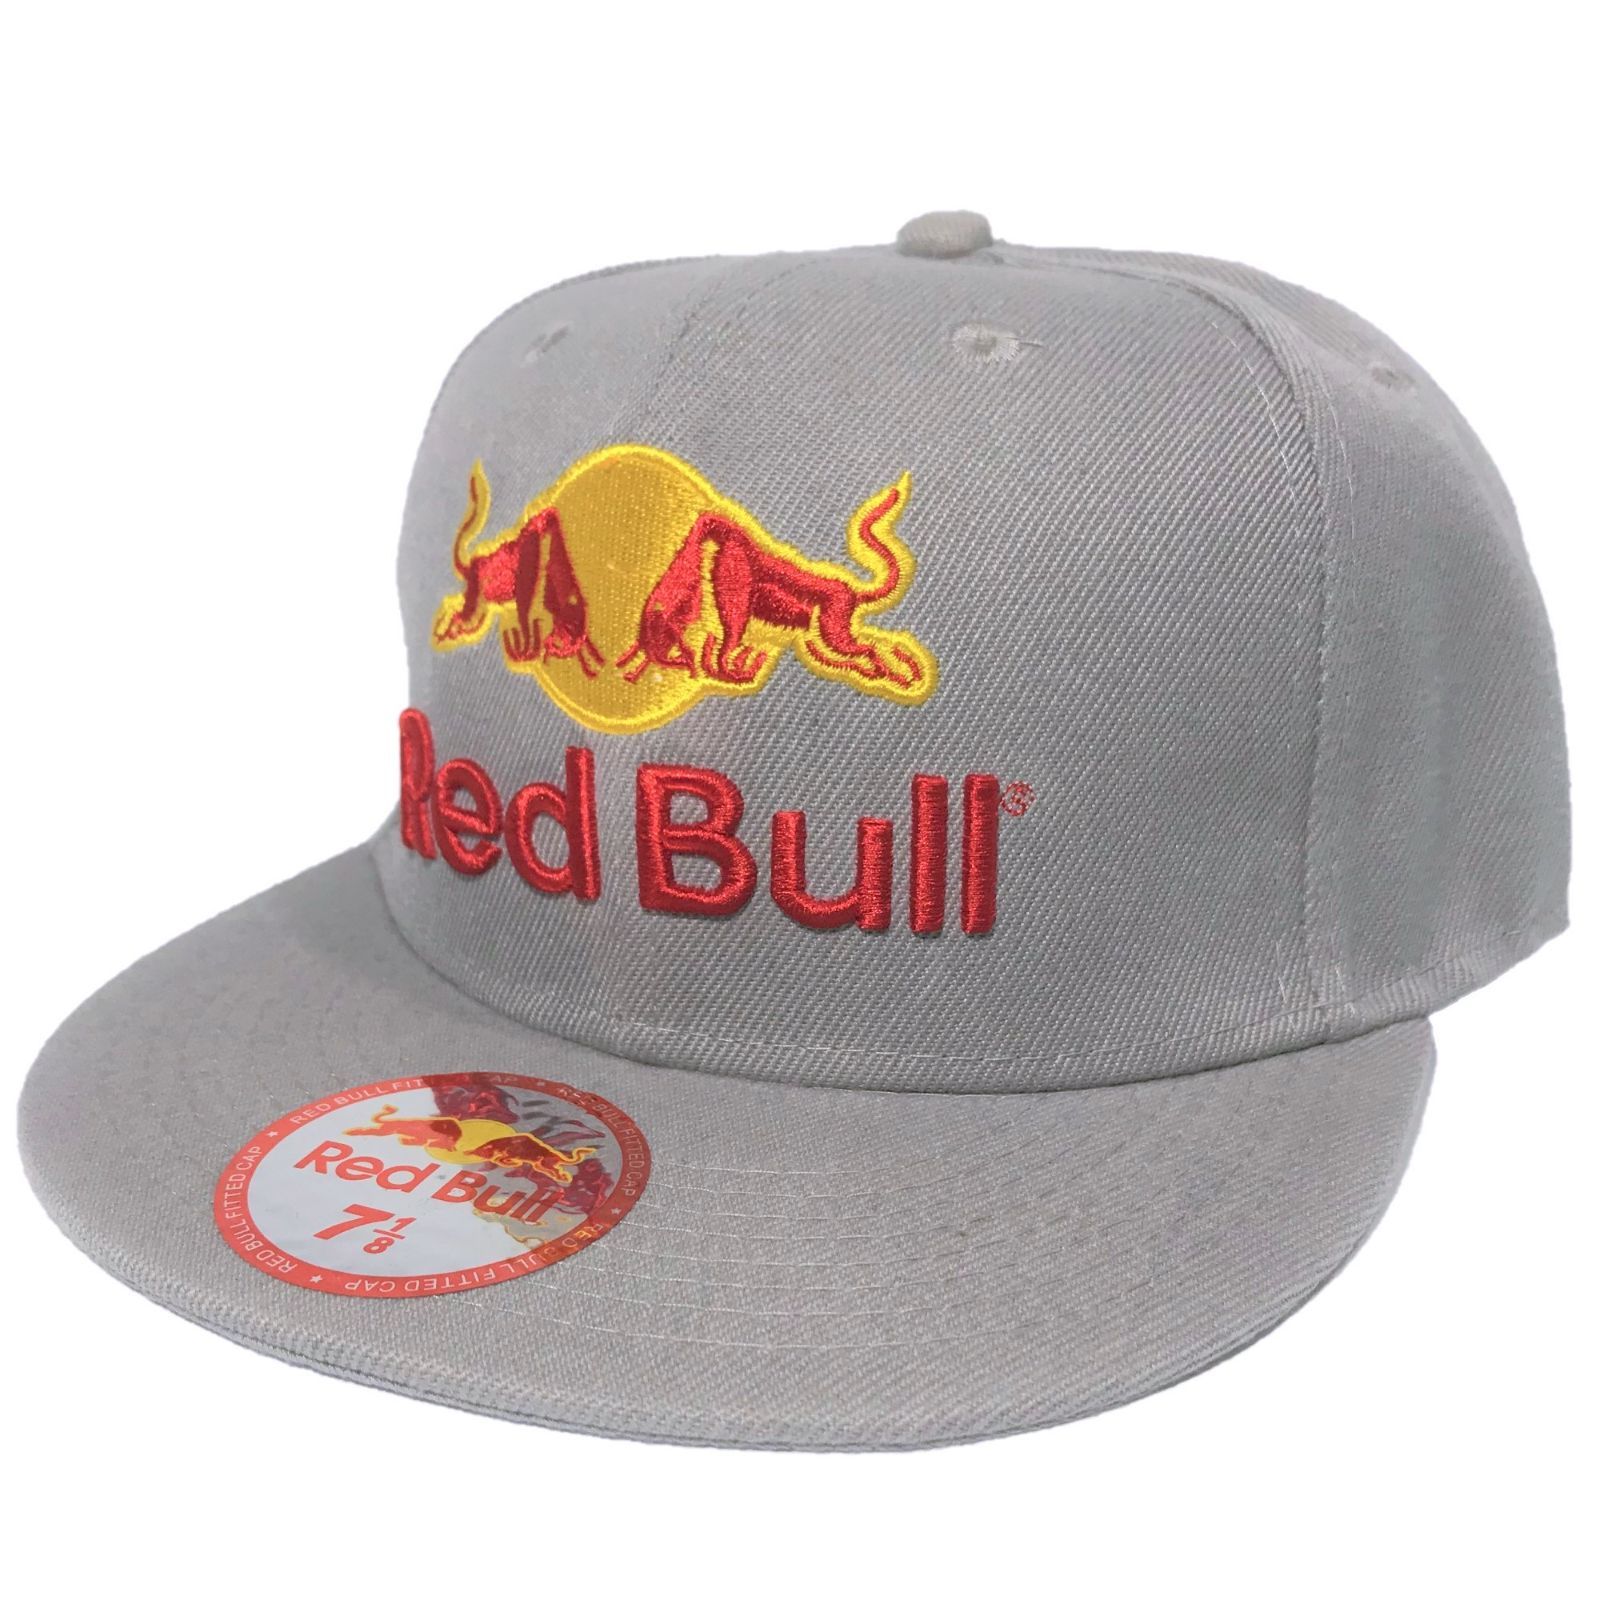 Red Bull レッドブル ロゴ ベースボールキャップ グレー - メルカリ